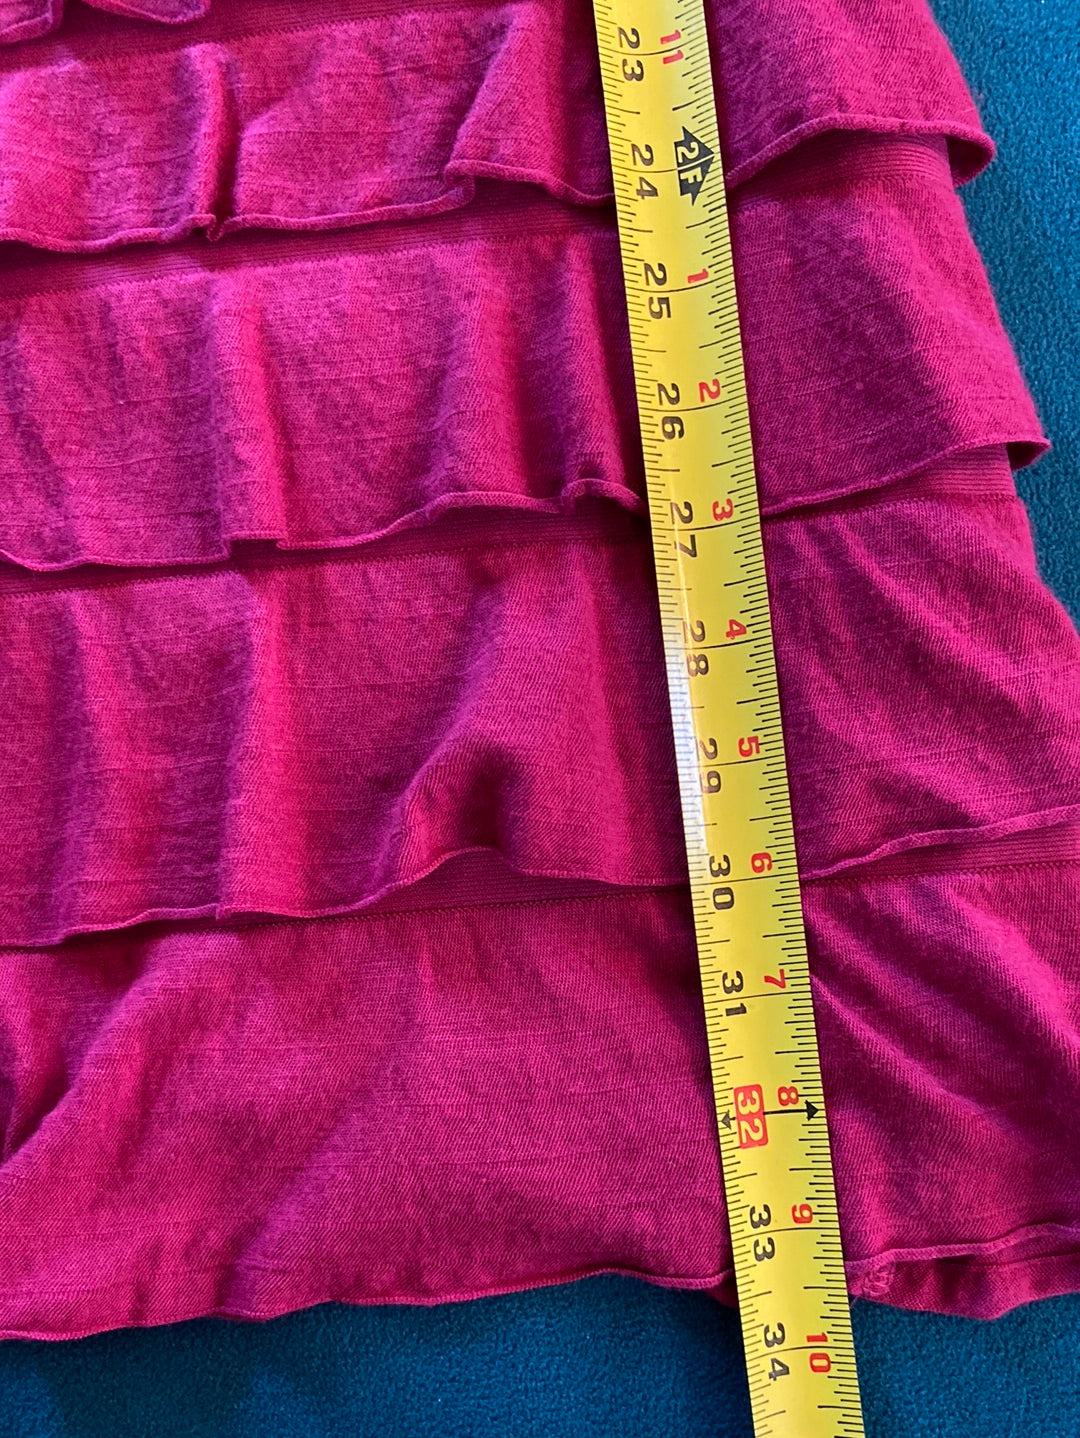 RASPBERRY PINK Chelsea & Violet Dress Size M